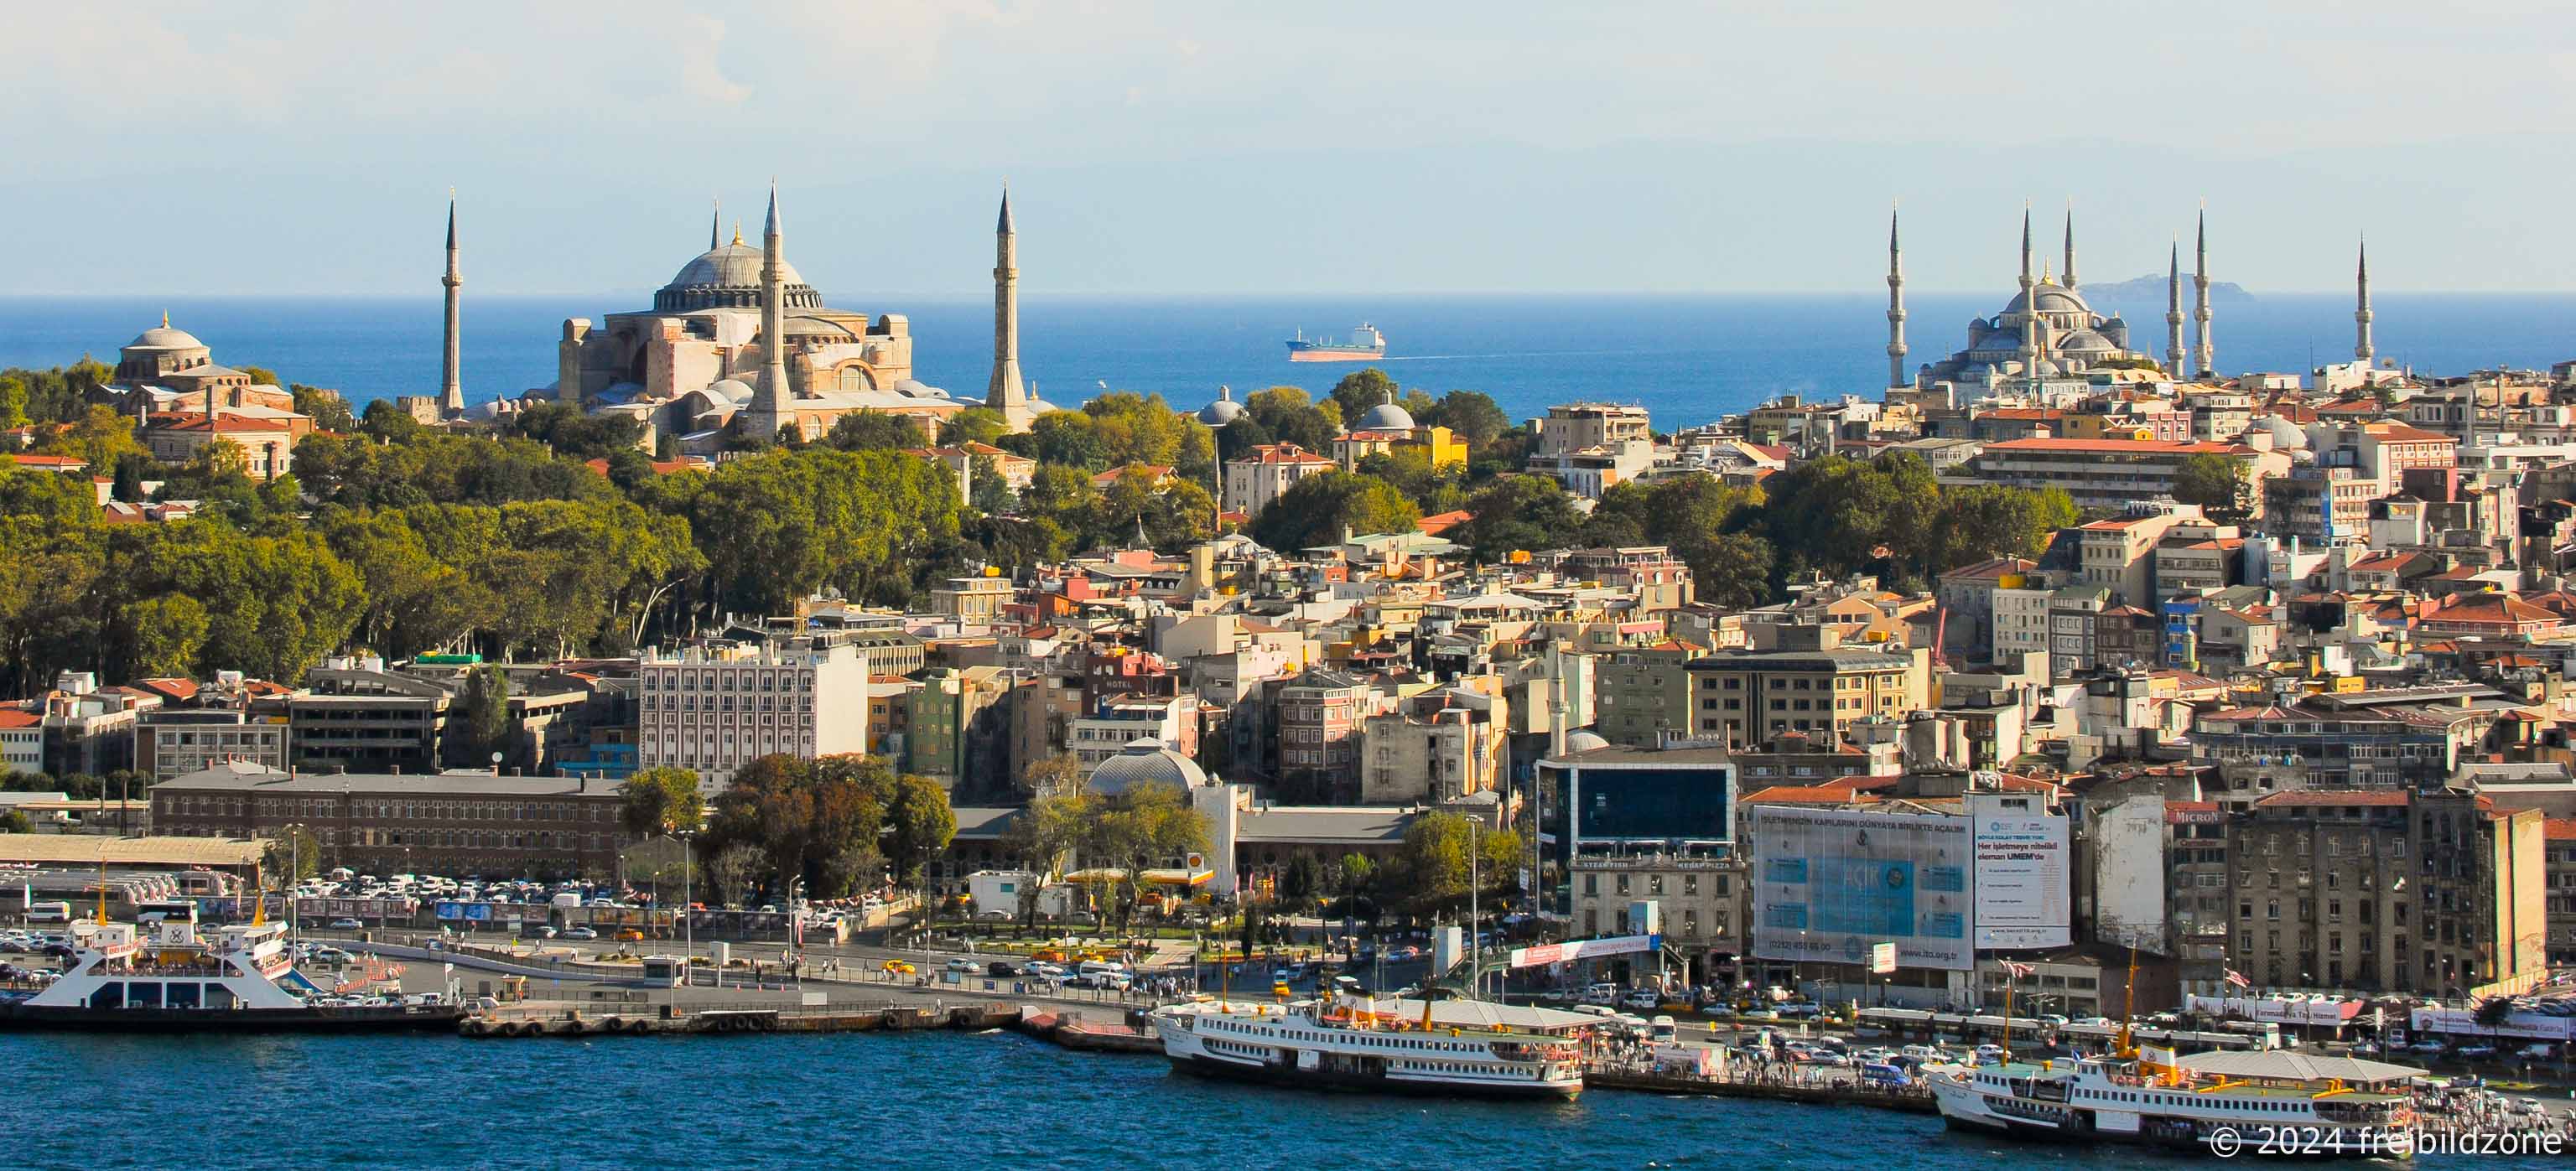 The Golden Horn, Istanbul, Turkey